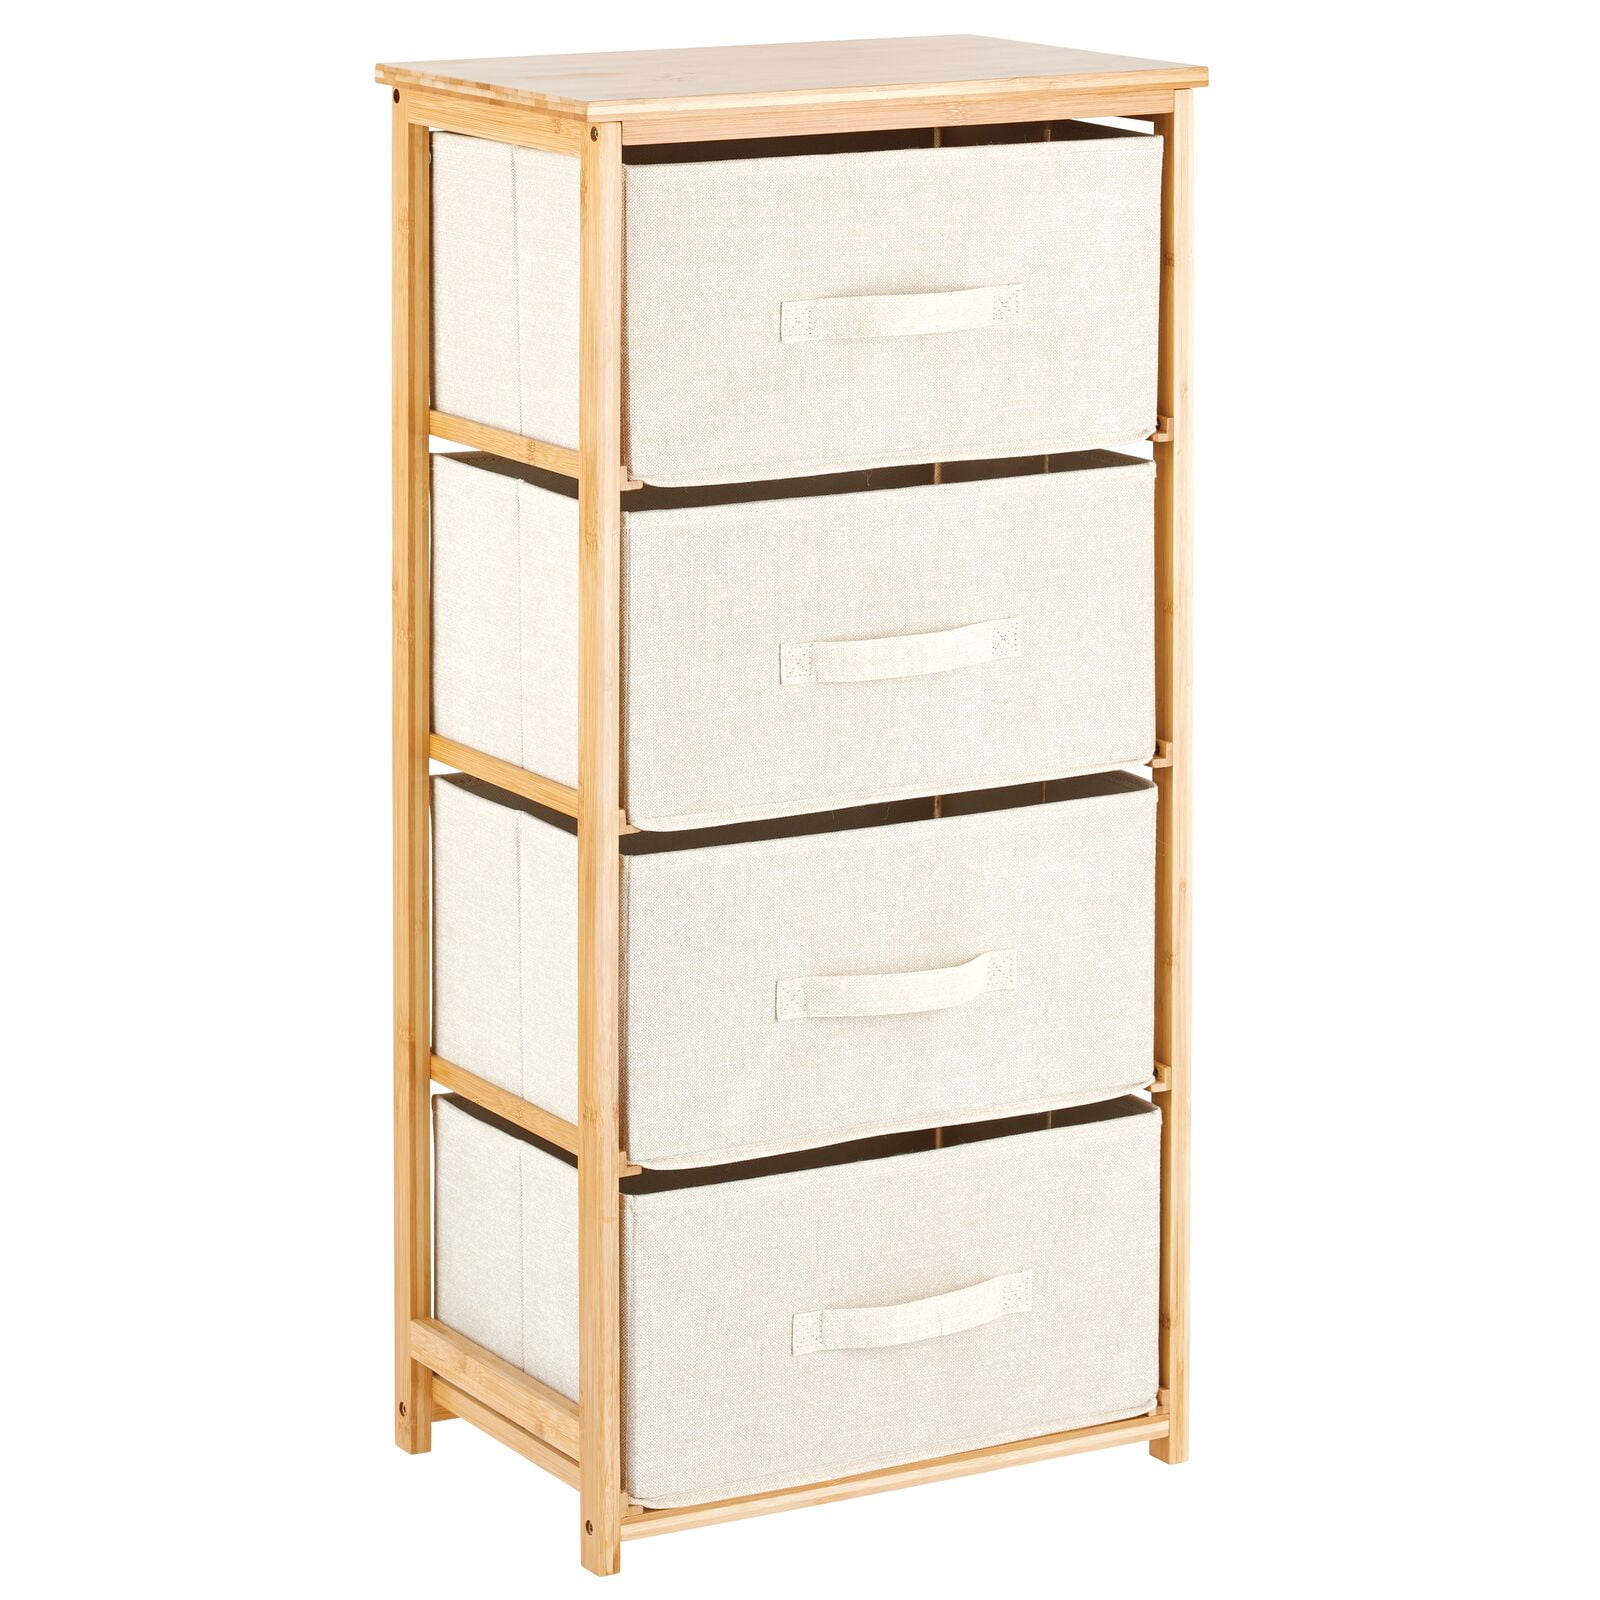 Mdesign Vertical Dresser Storage Tower, White Bamboo Dresser Bedroom Set